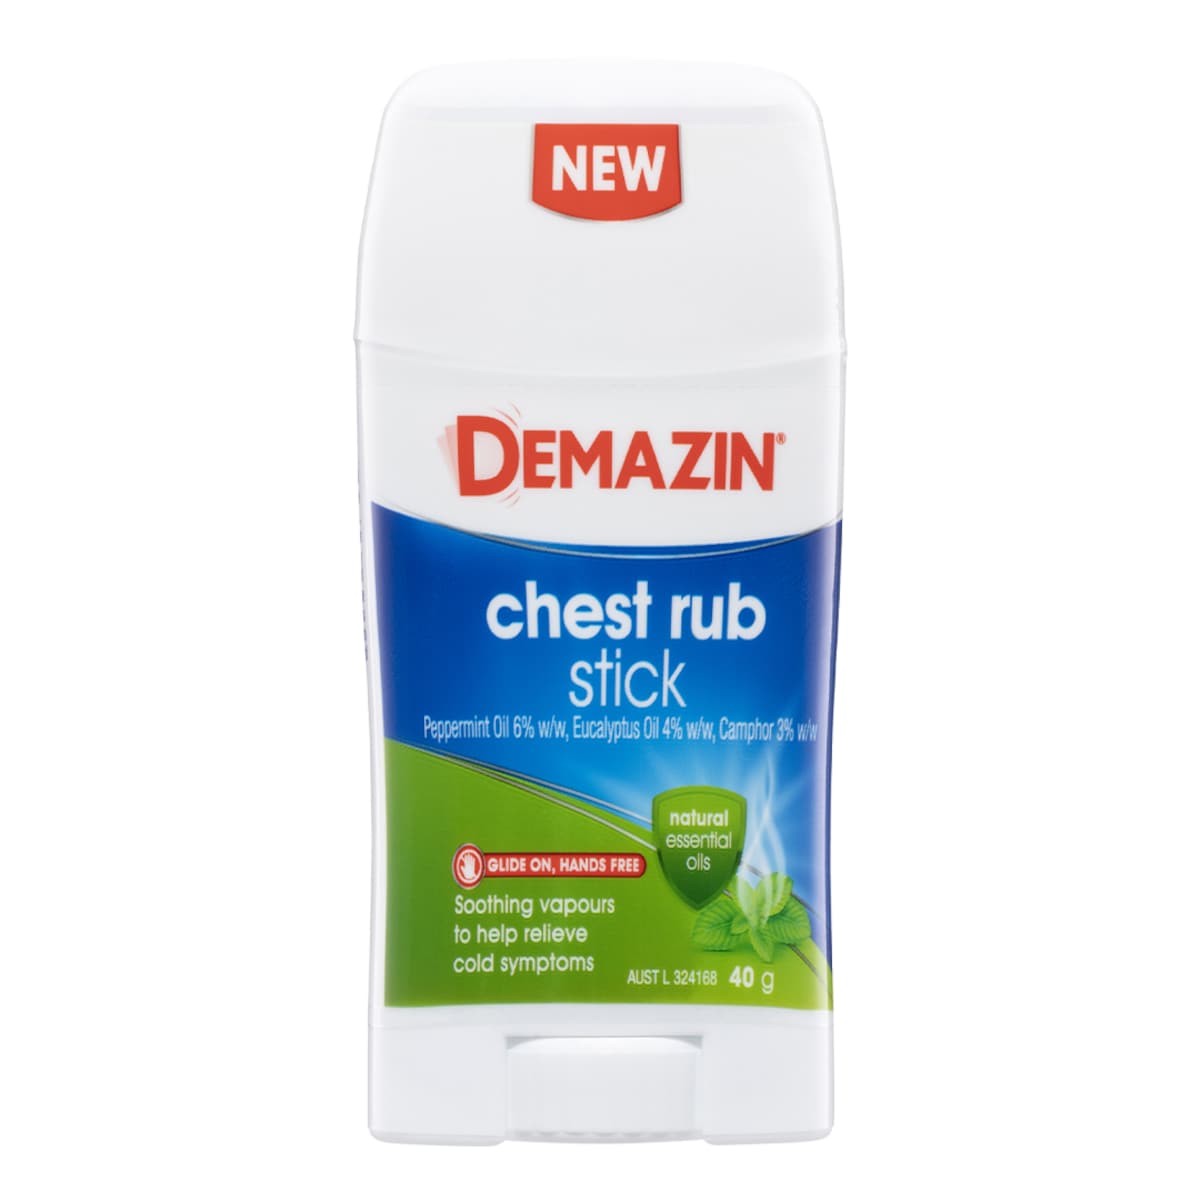 Demazin Chest Rub Stick Natural Essential Oils 40g